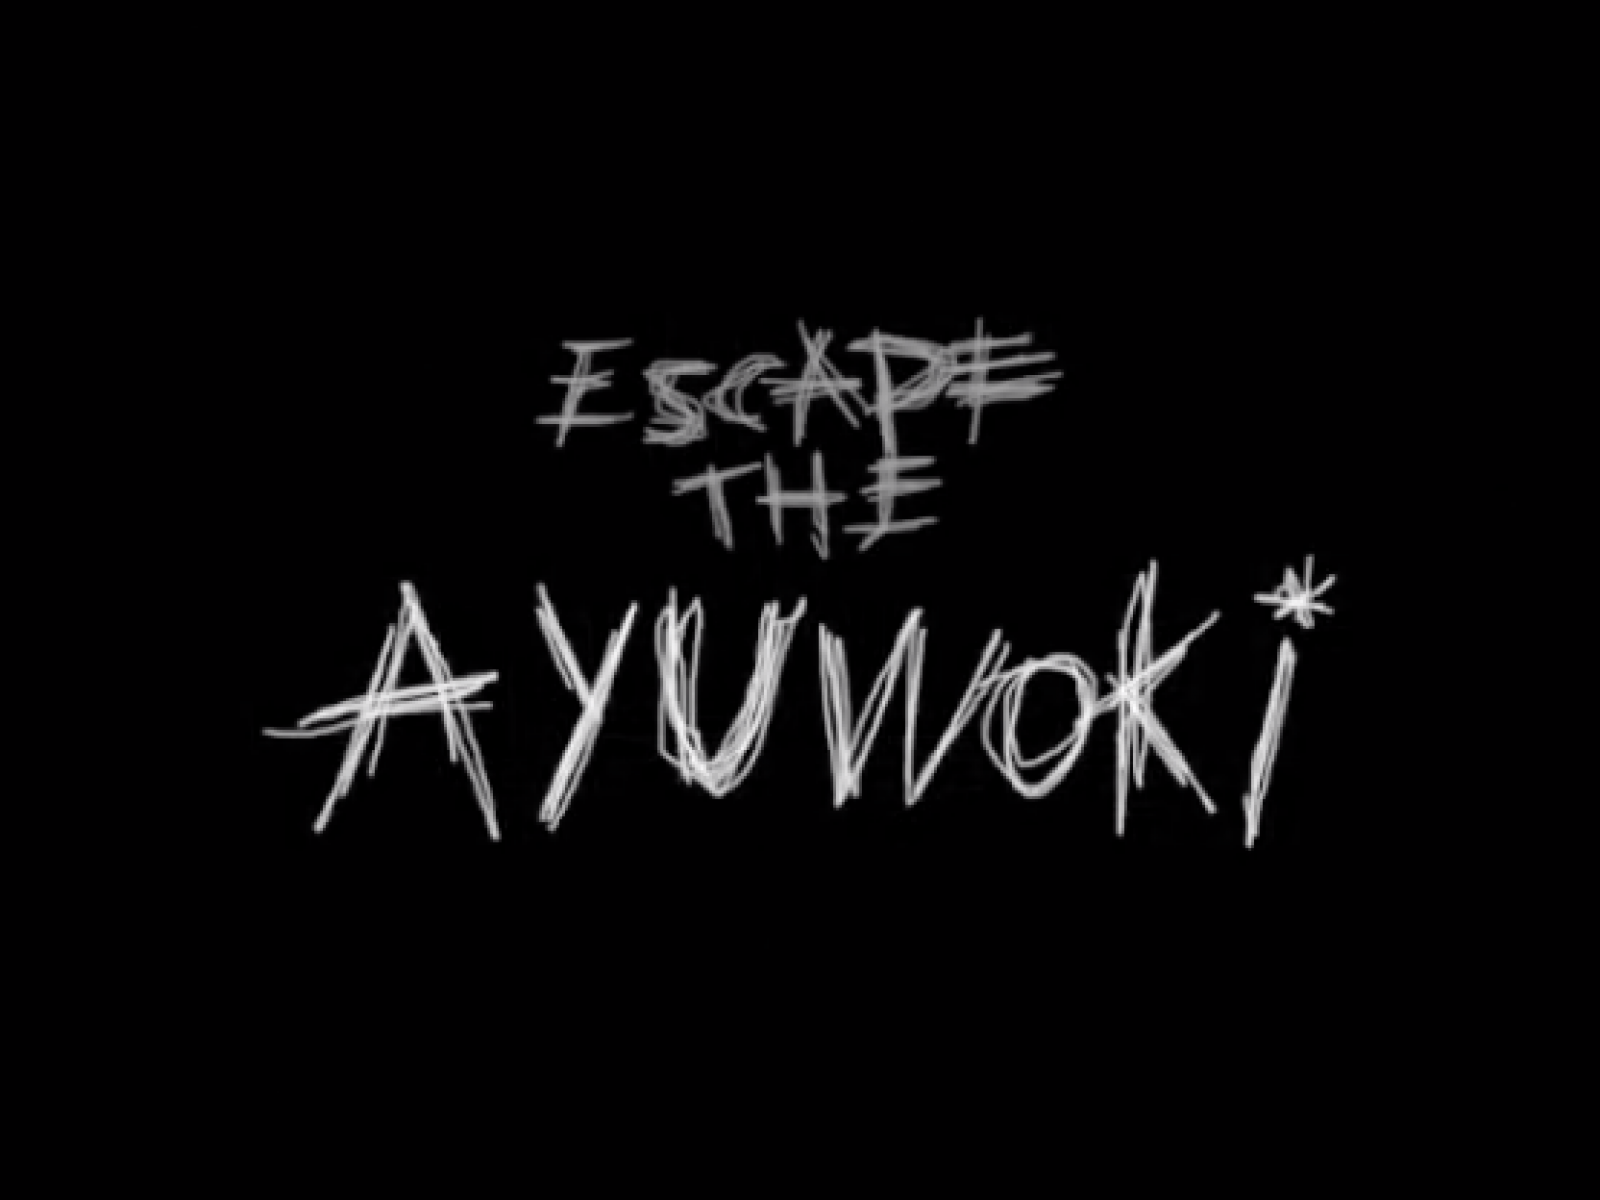 Escape the ayuwoki в стиме фото 69